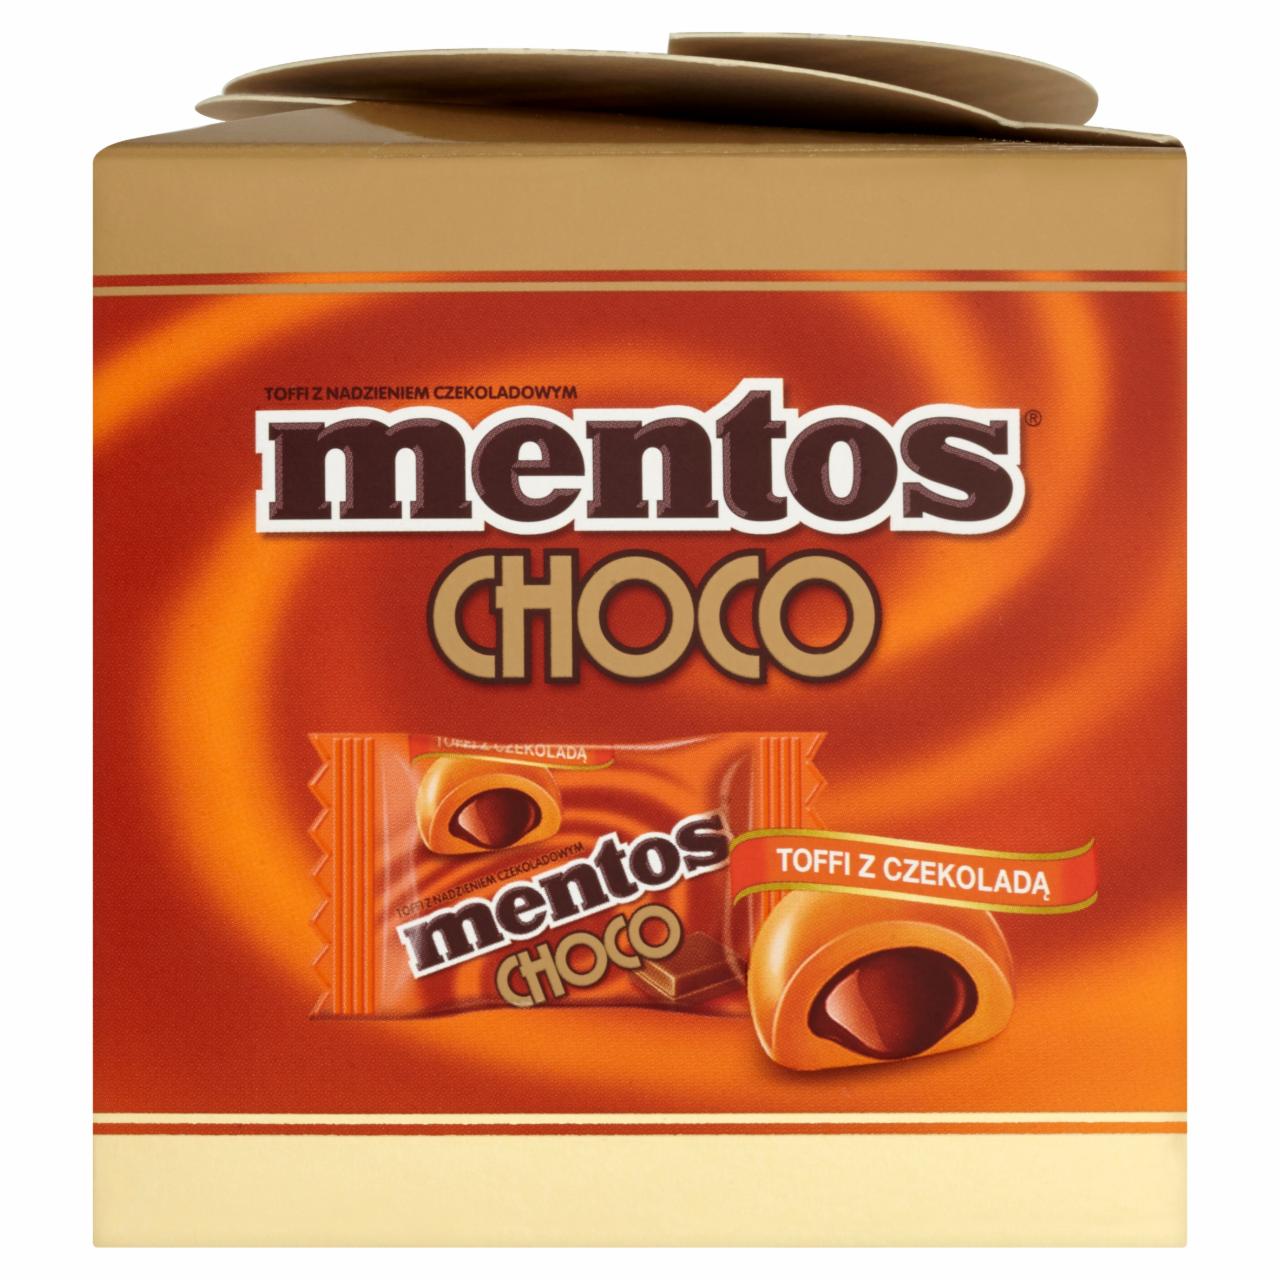 Photo - Mentos Choco Toffee with Chocolate 92 g